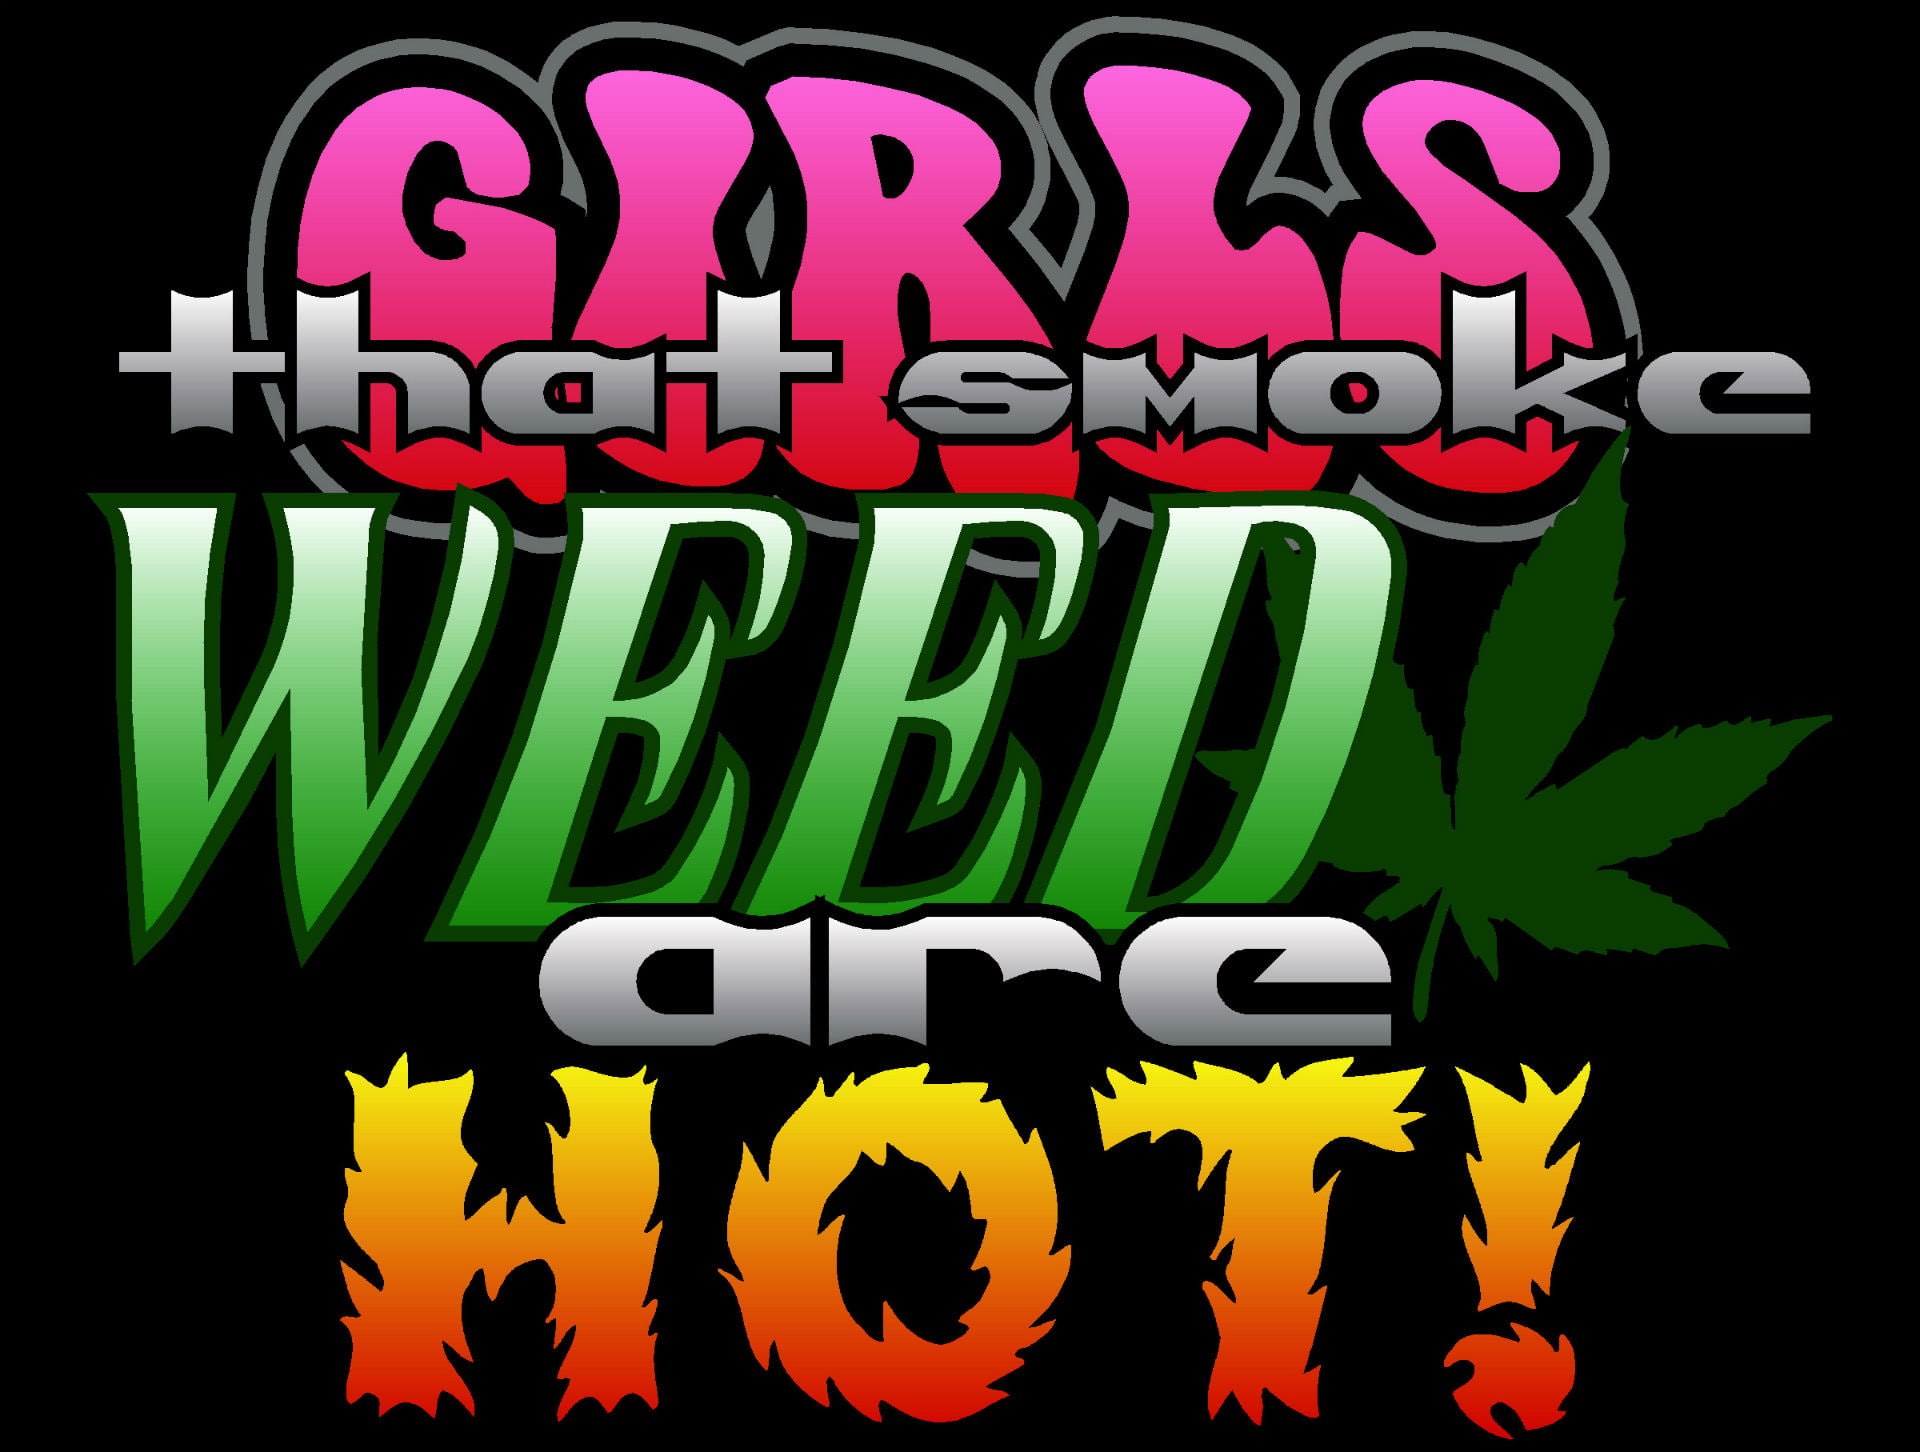 babes, funny, girls, hot, humor, marijuana, weed